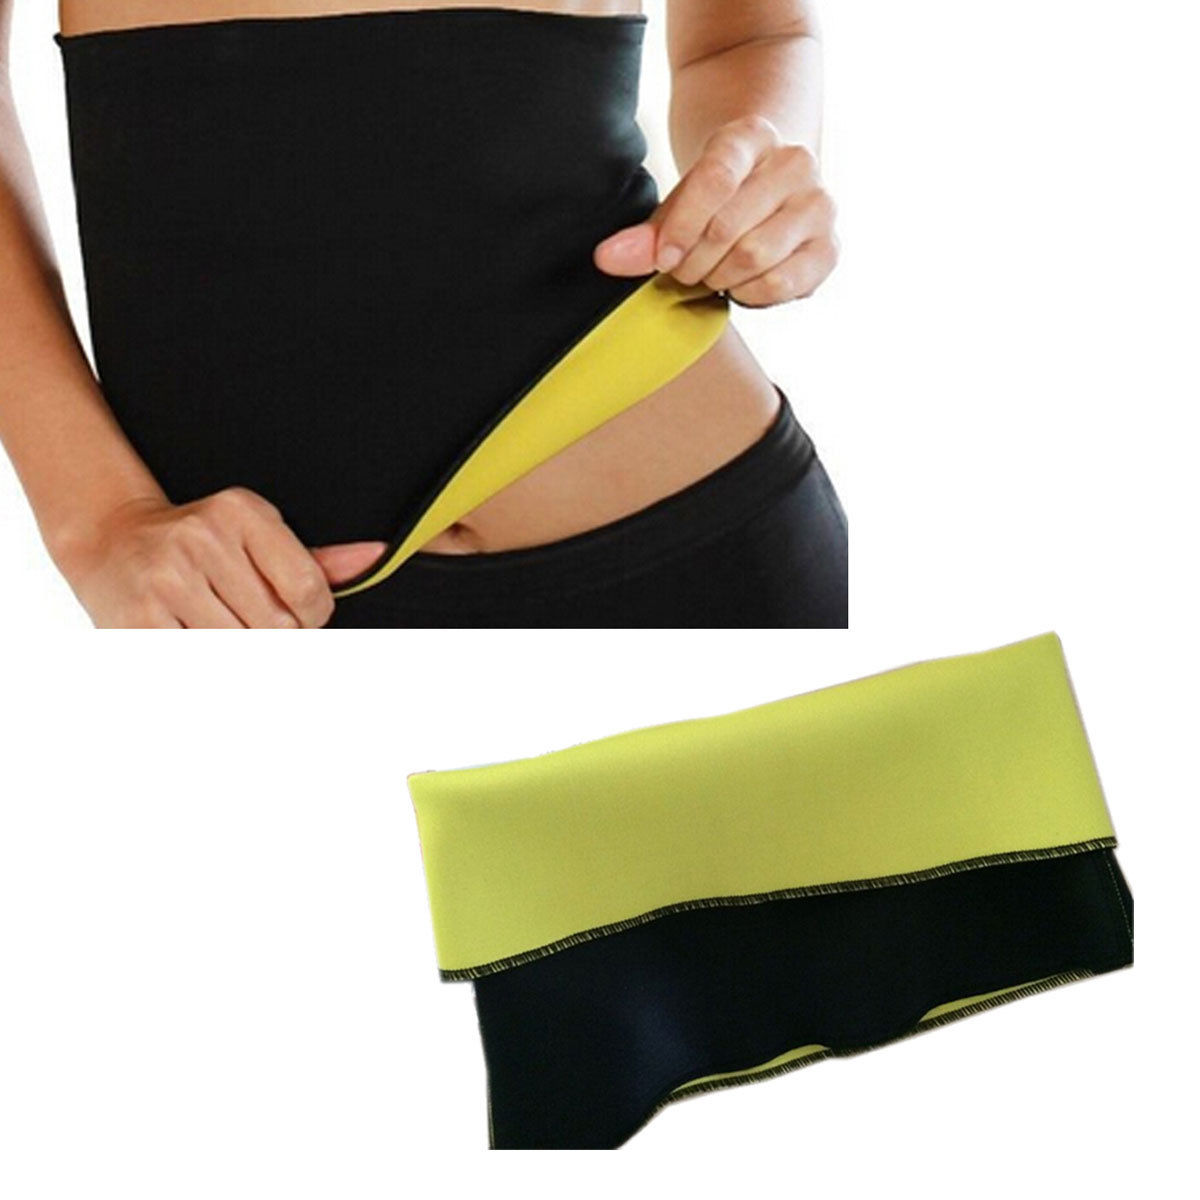 Neoprene Slimming Waist Belts Body Shaper Slimming training corsets Pants Tops